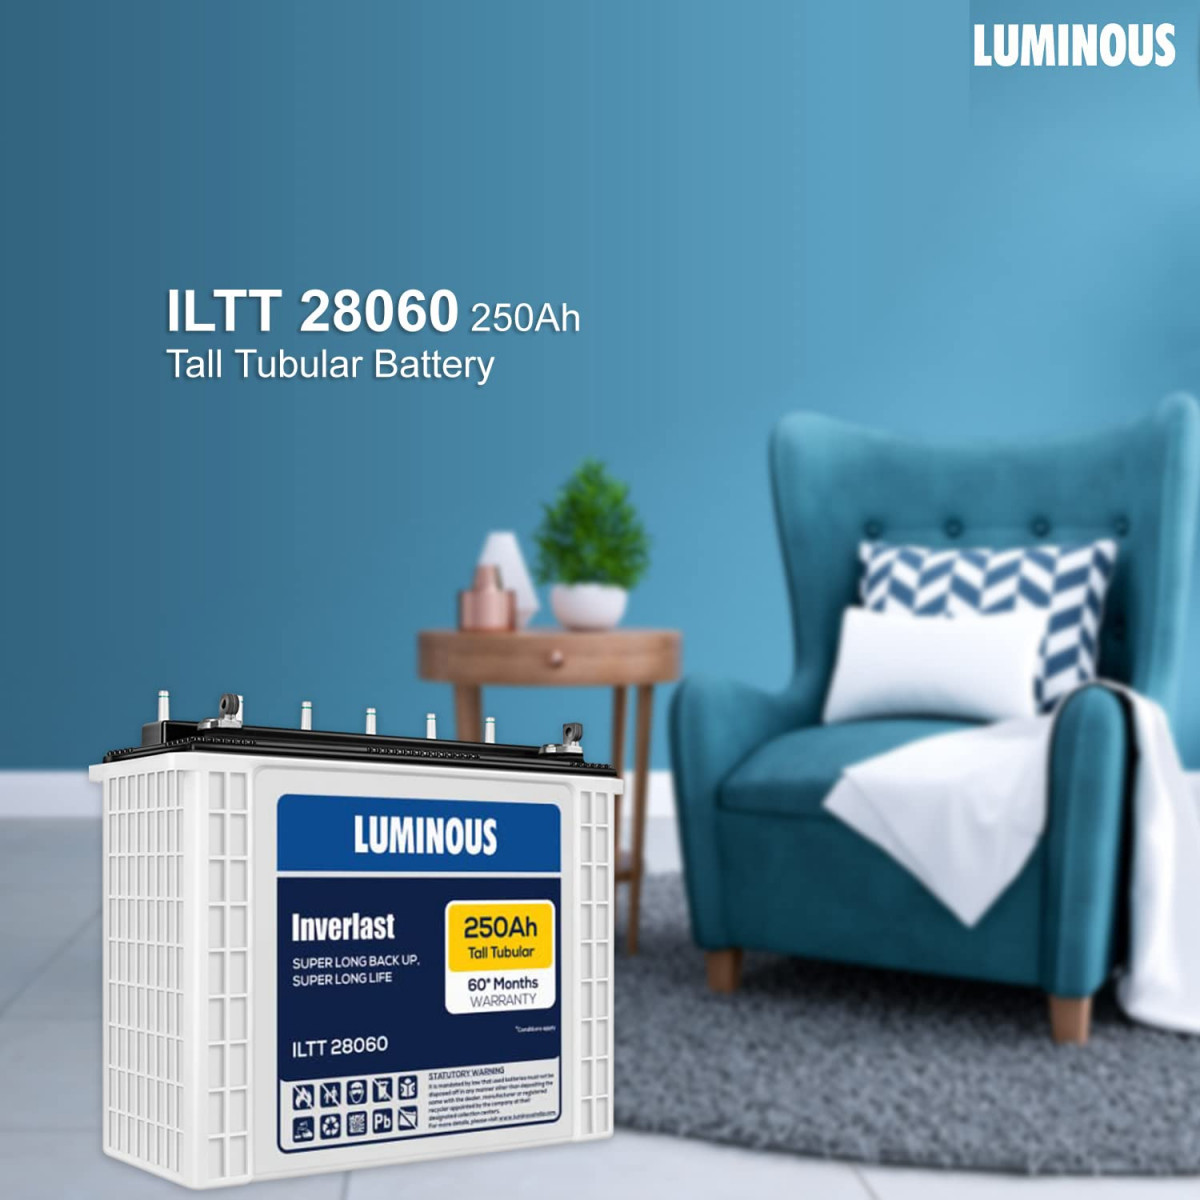 Luminous Inverlast ILTT28060 250 Ah Tall Tubular Inverter Battery with 60 months warranty for Home Office  Shops